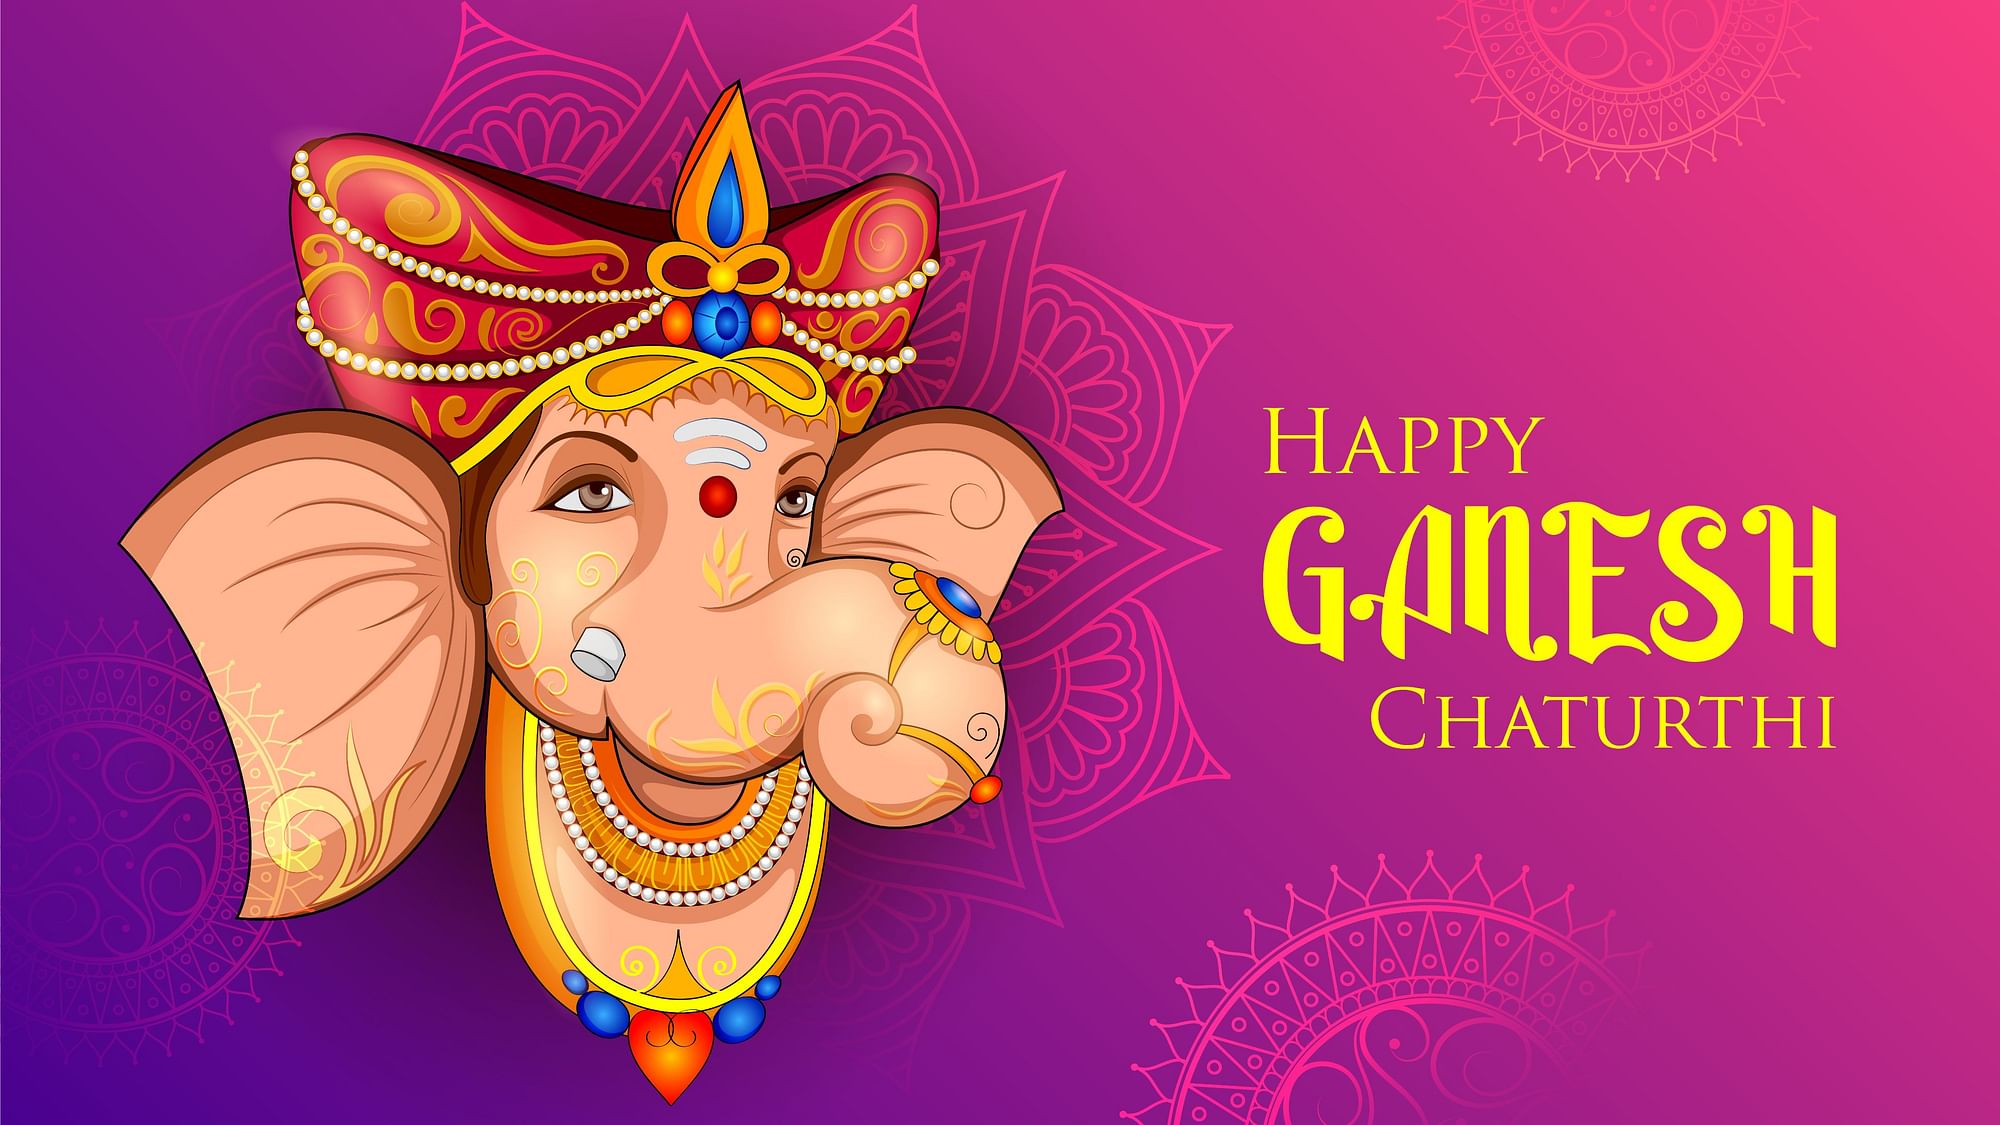 Ganesh Chaturthi 2020 Wishes in English, Hindi. Happy Ganesh Utsav